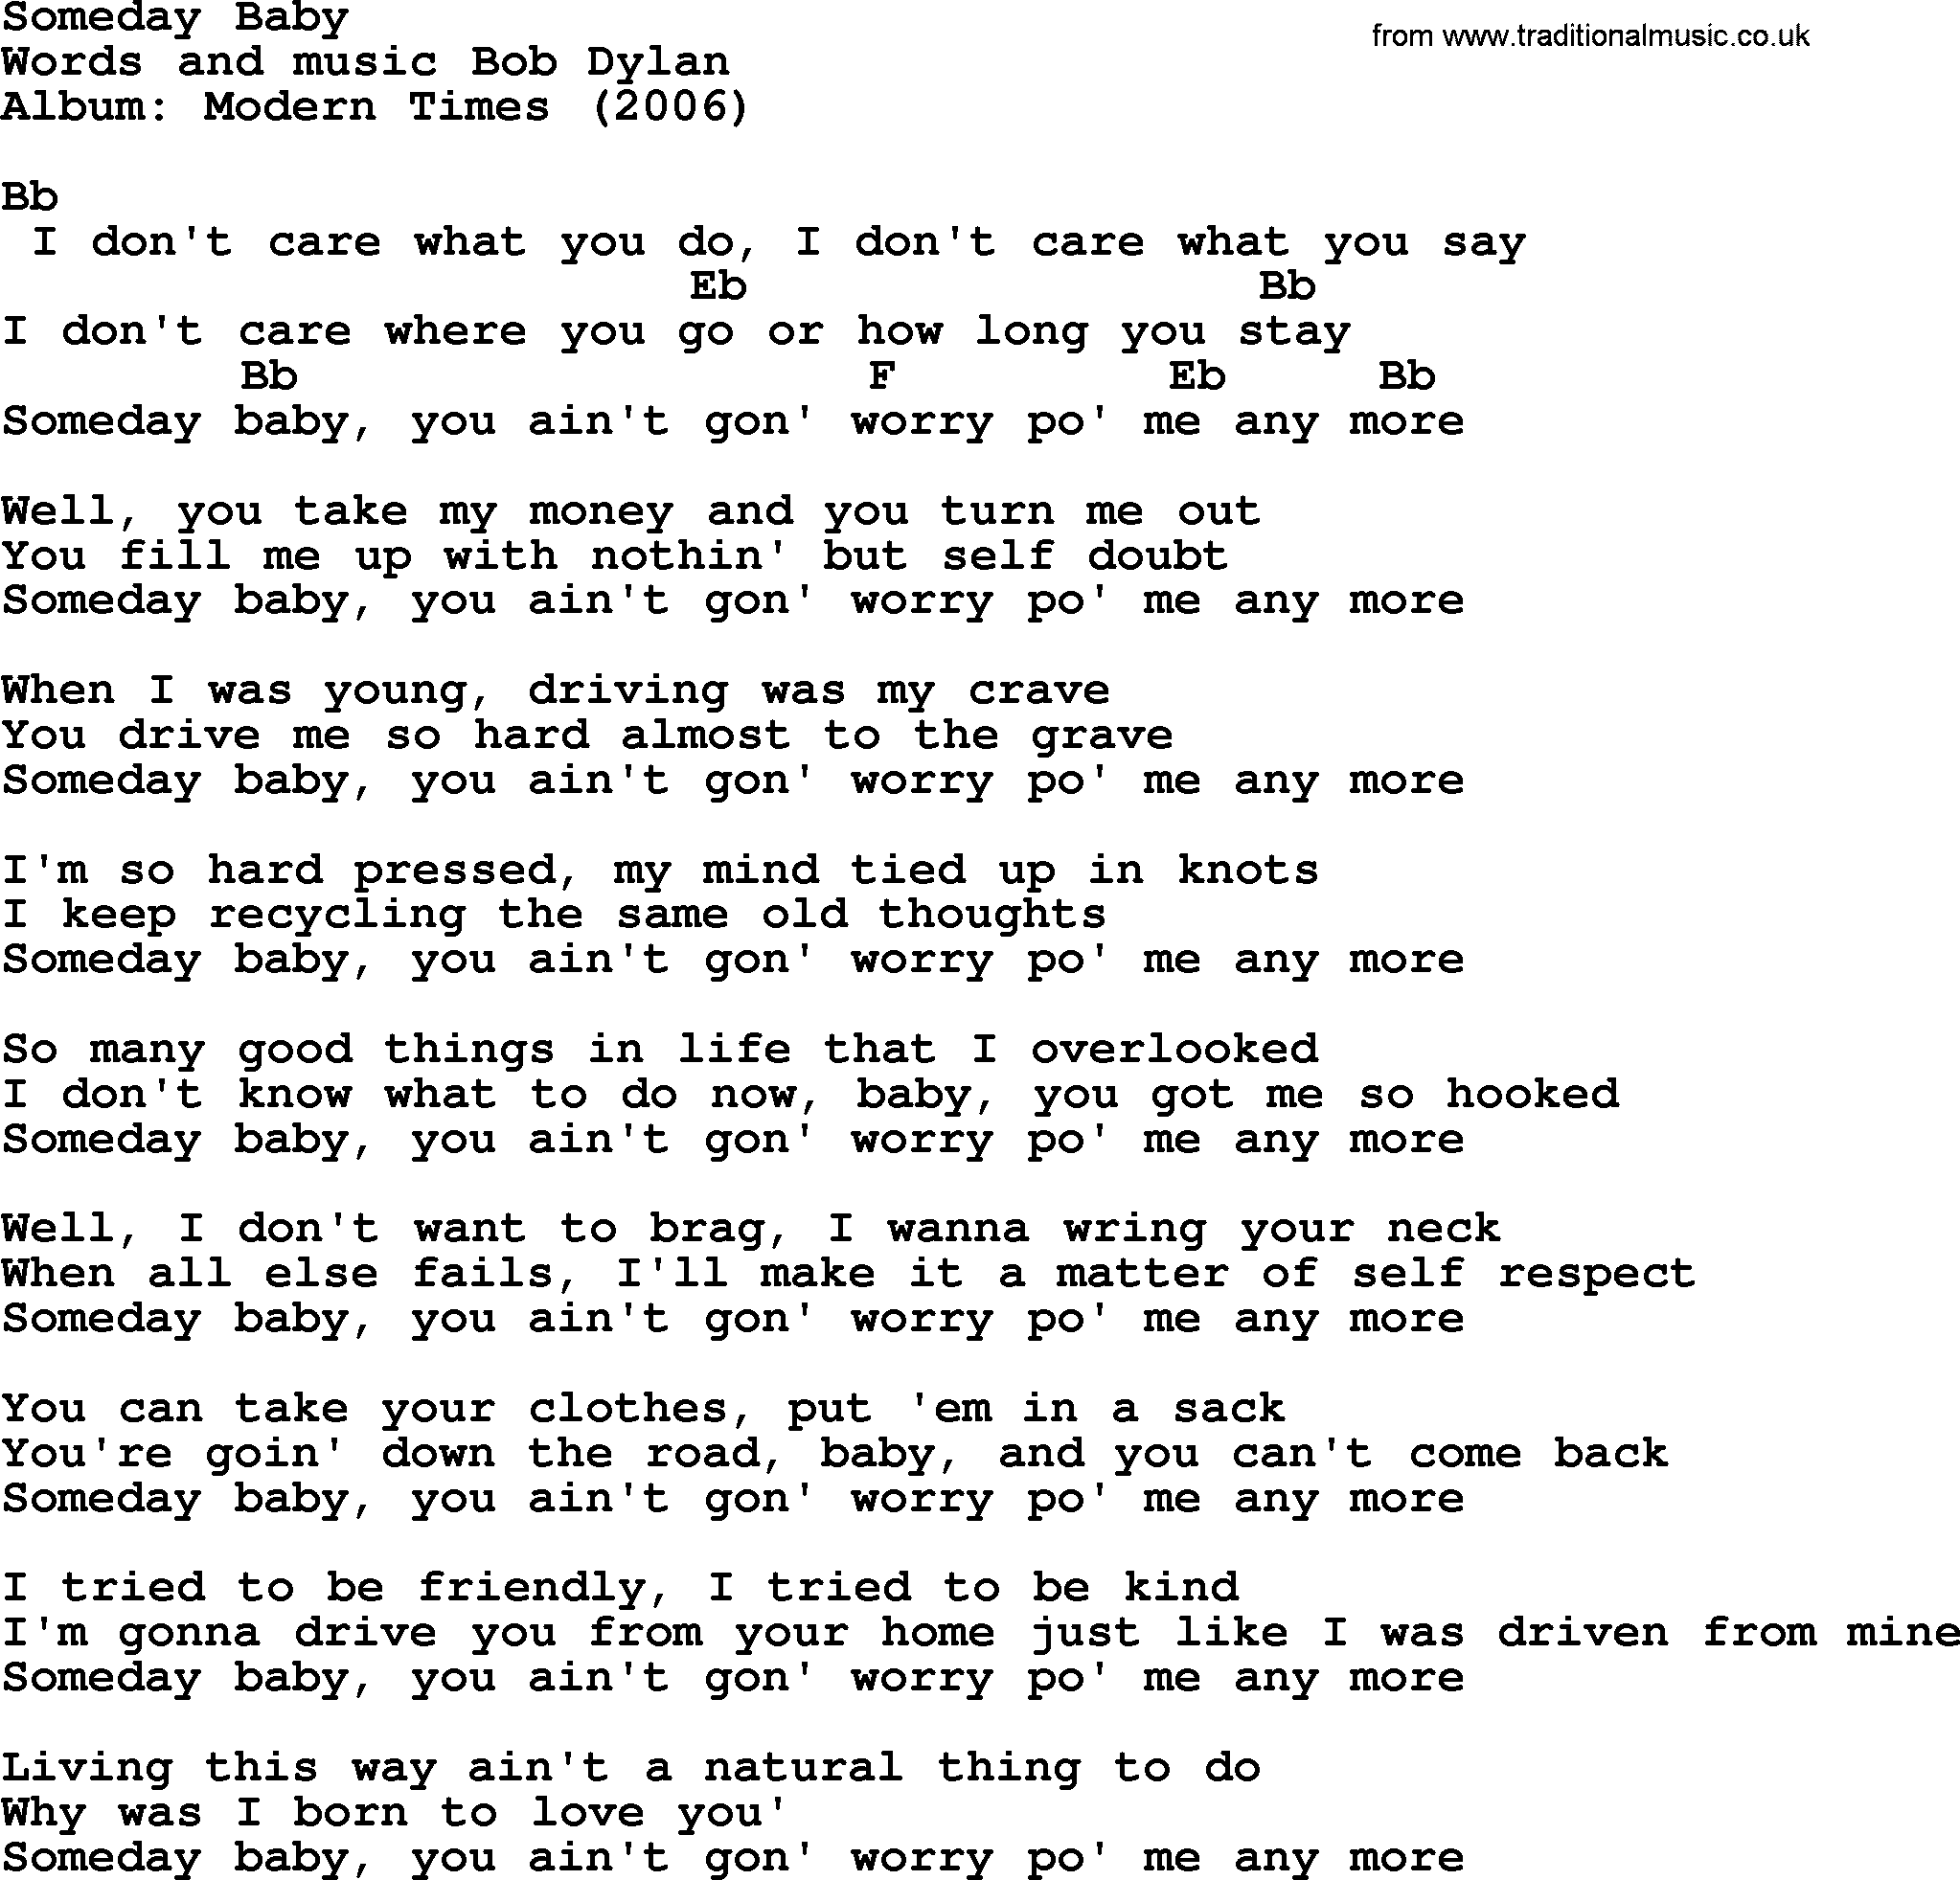 Bob Dylan song, lyrics with chords - Someday Baby